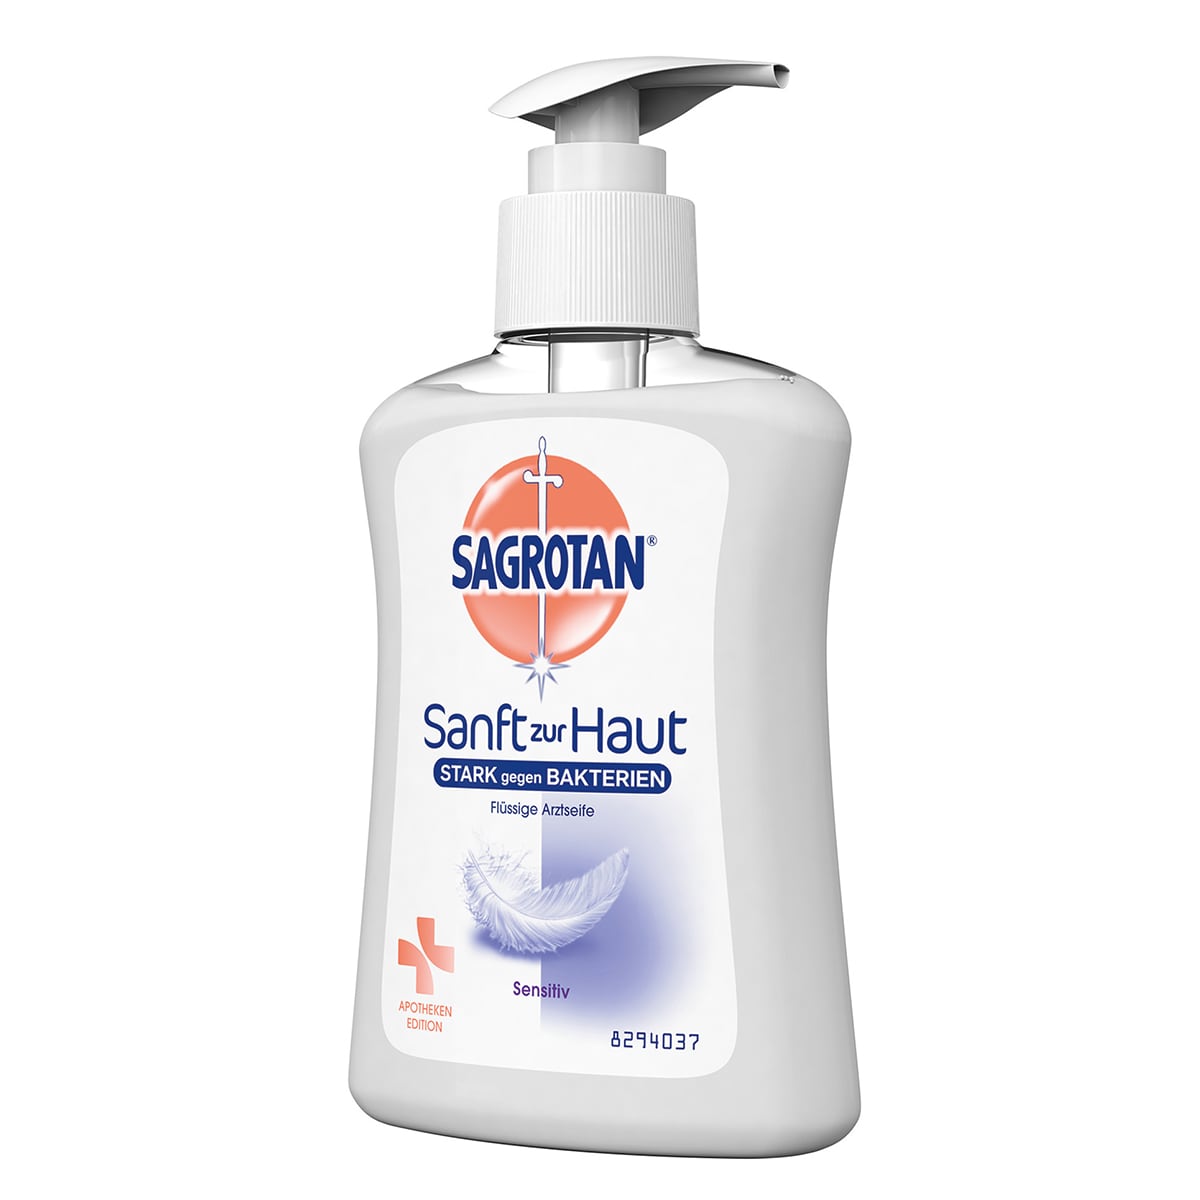 Sagrotan Medical soap for hand hygiene liquid